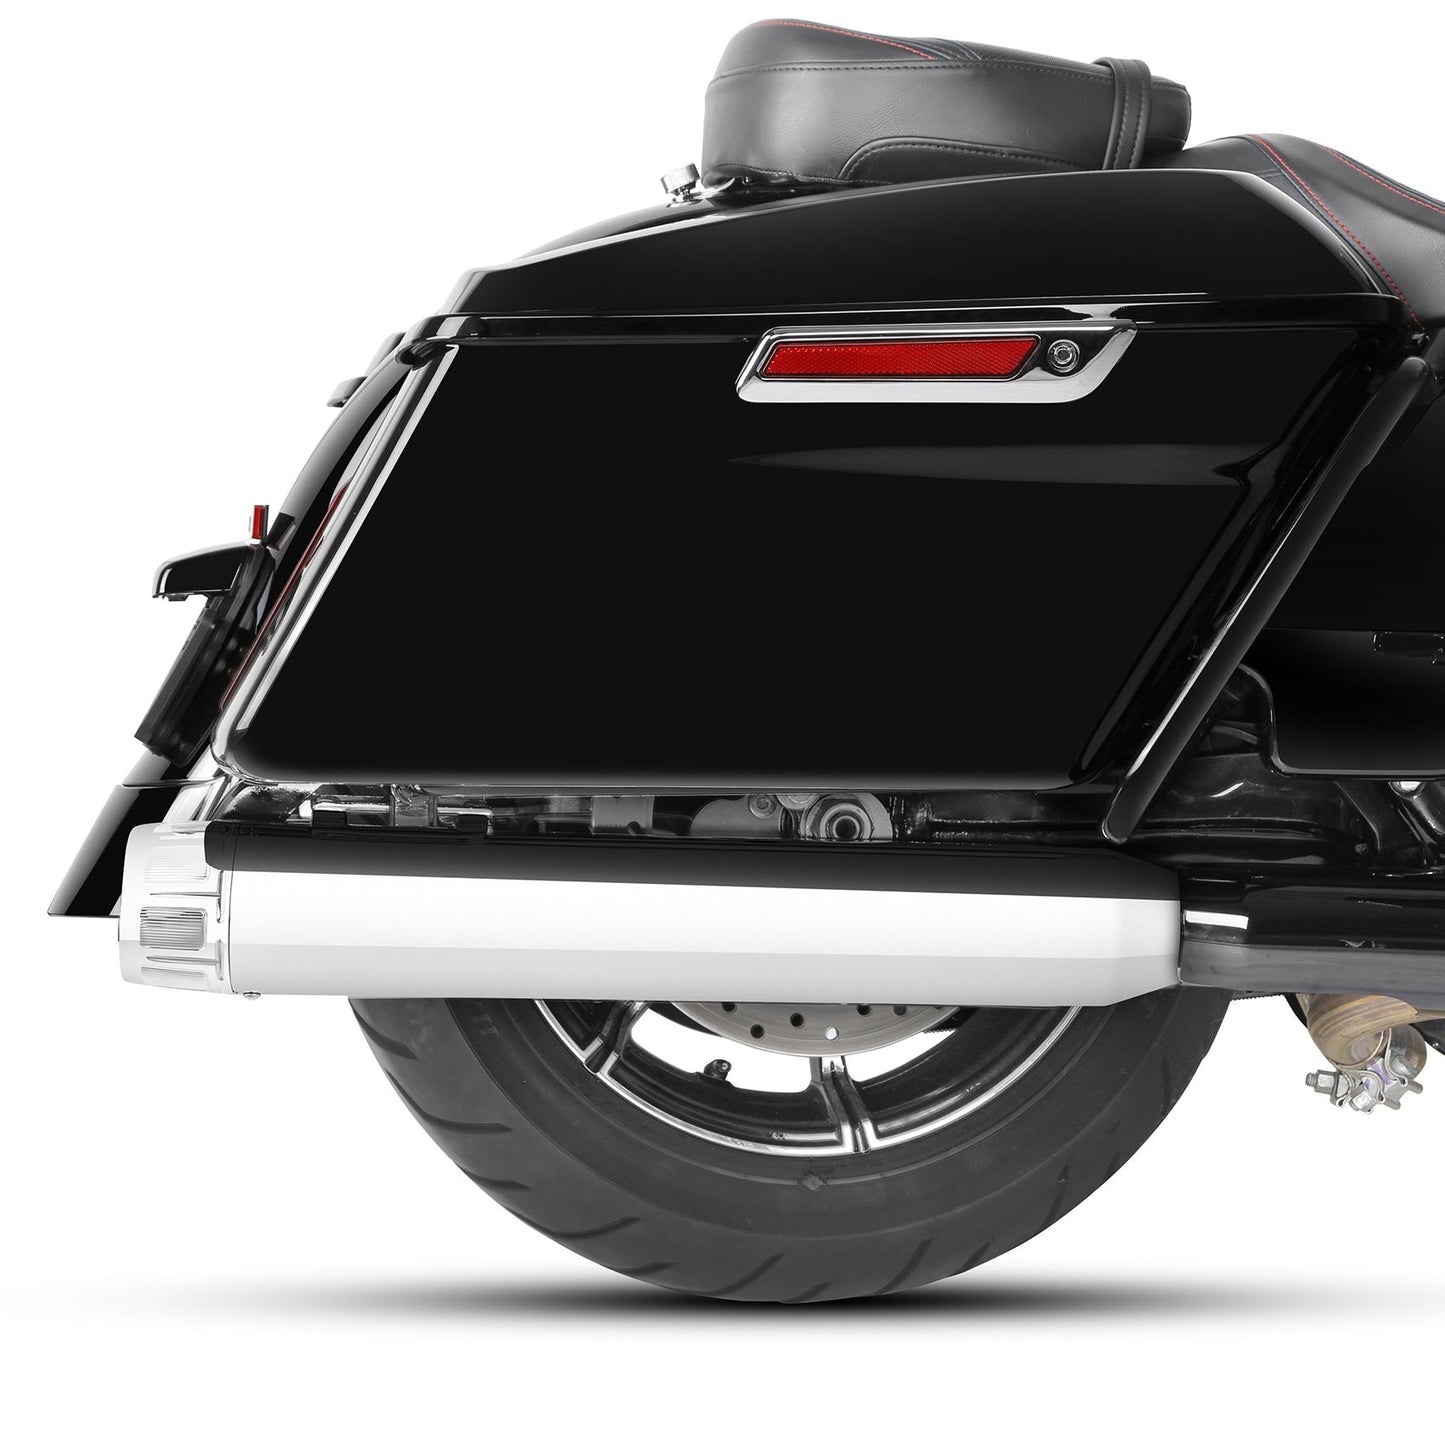 Voodoo Cycle House Custom 4" Chrome / Black Slip-on Mufflers For 1995-2016 Harley-Davidson Touring Models In Various Styles